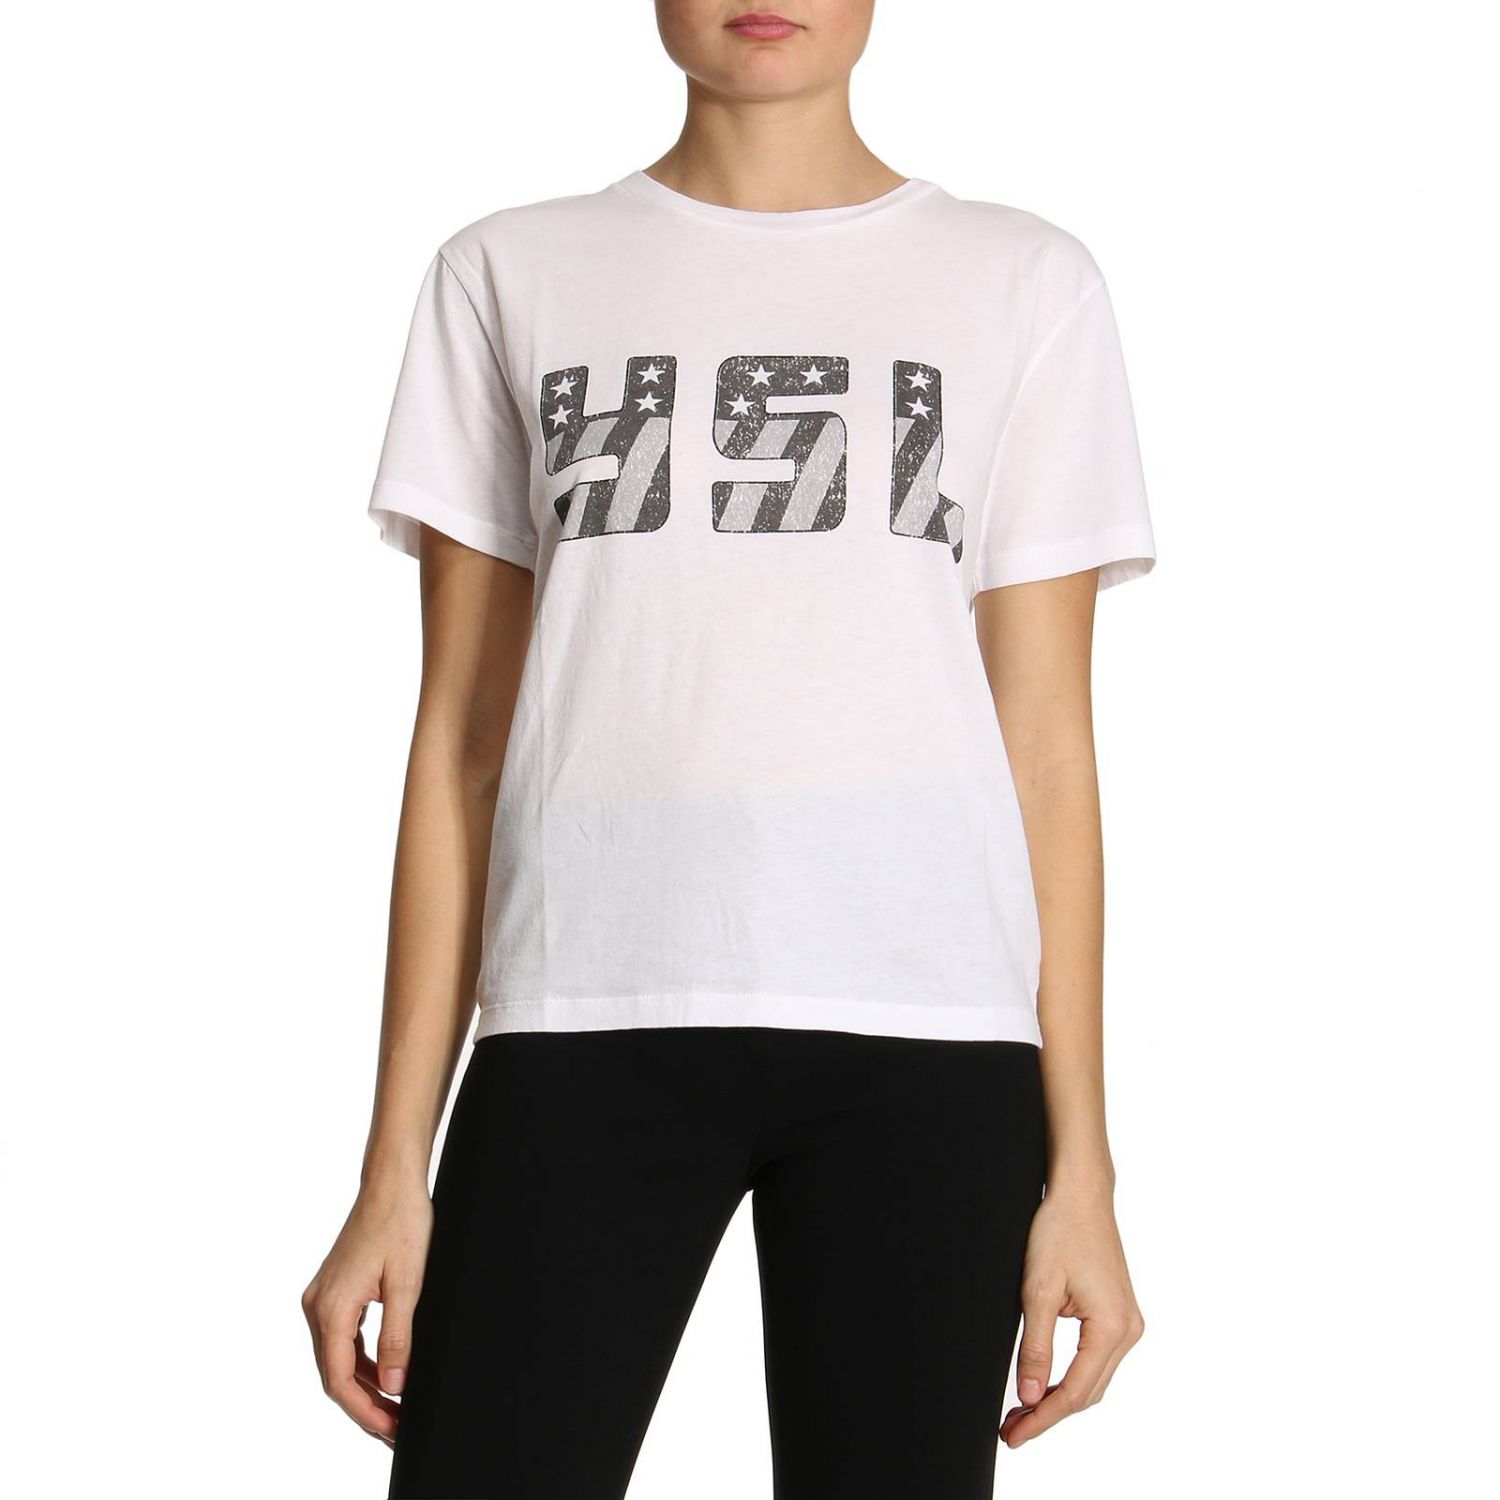 SAINT LAURENT: T-shirt women | T-Shirt Saint Laurent Women White | T ...